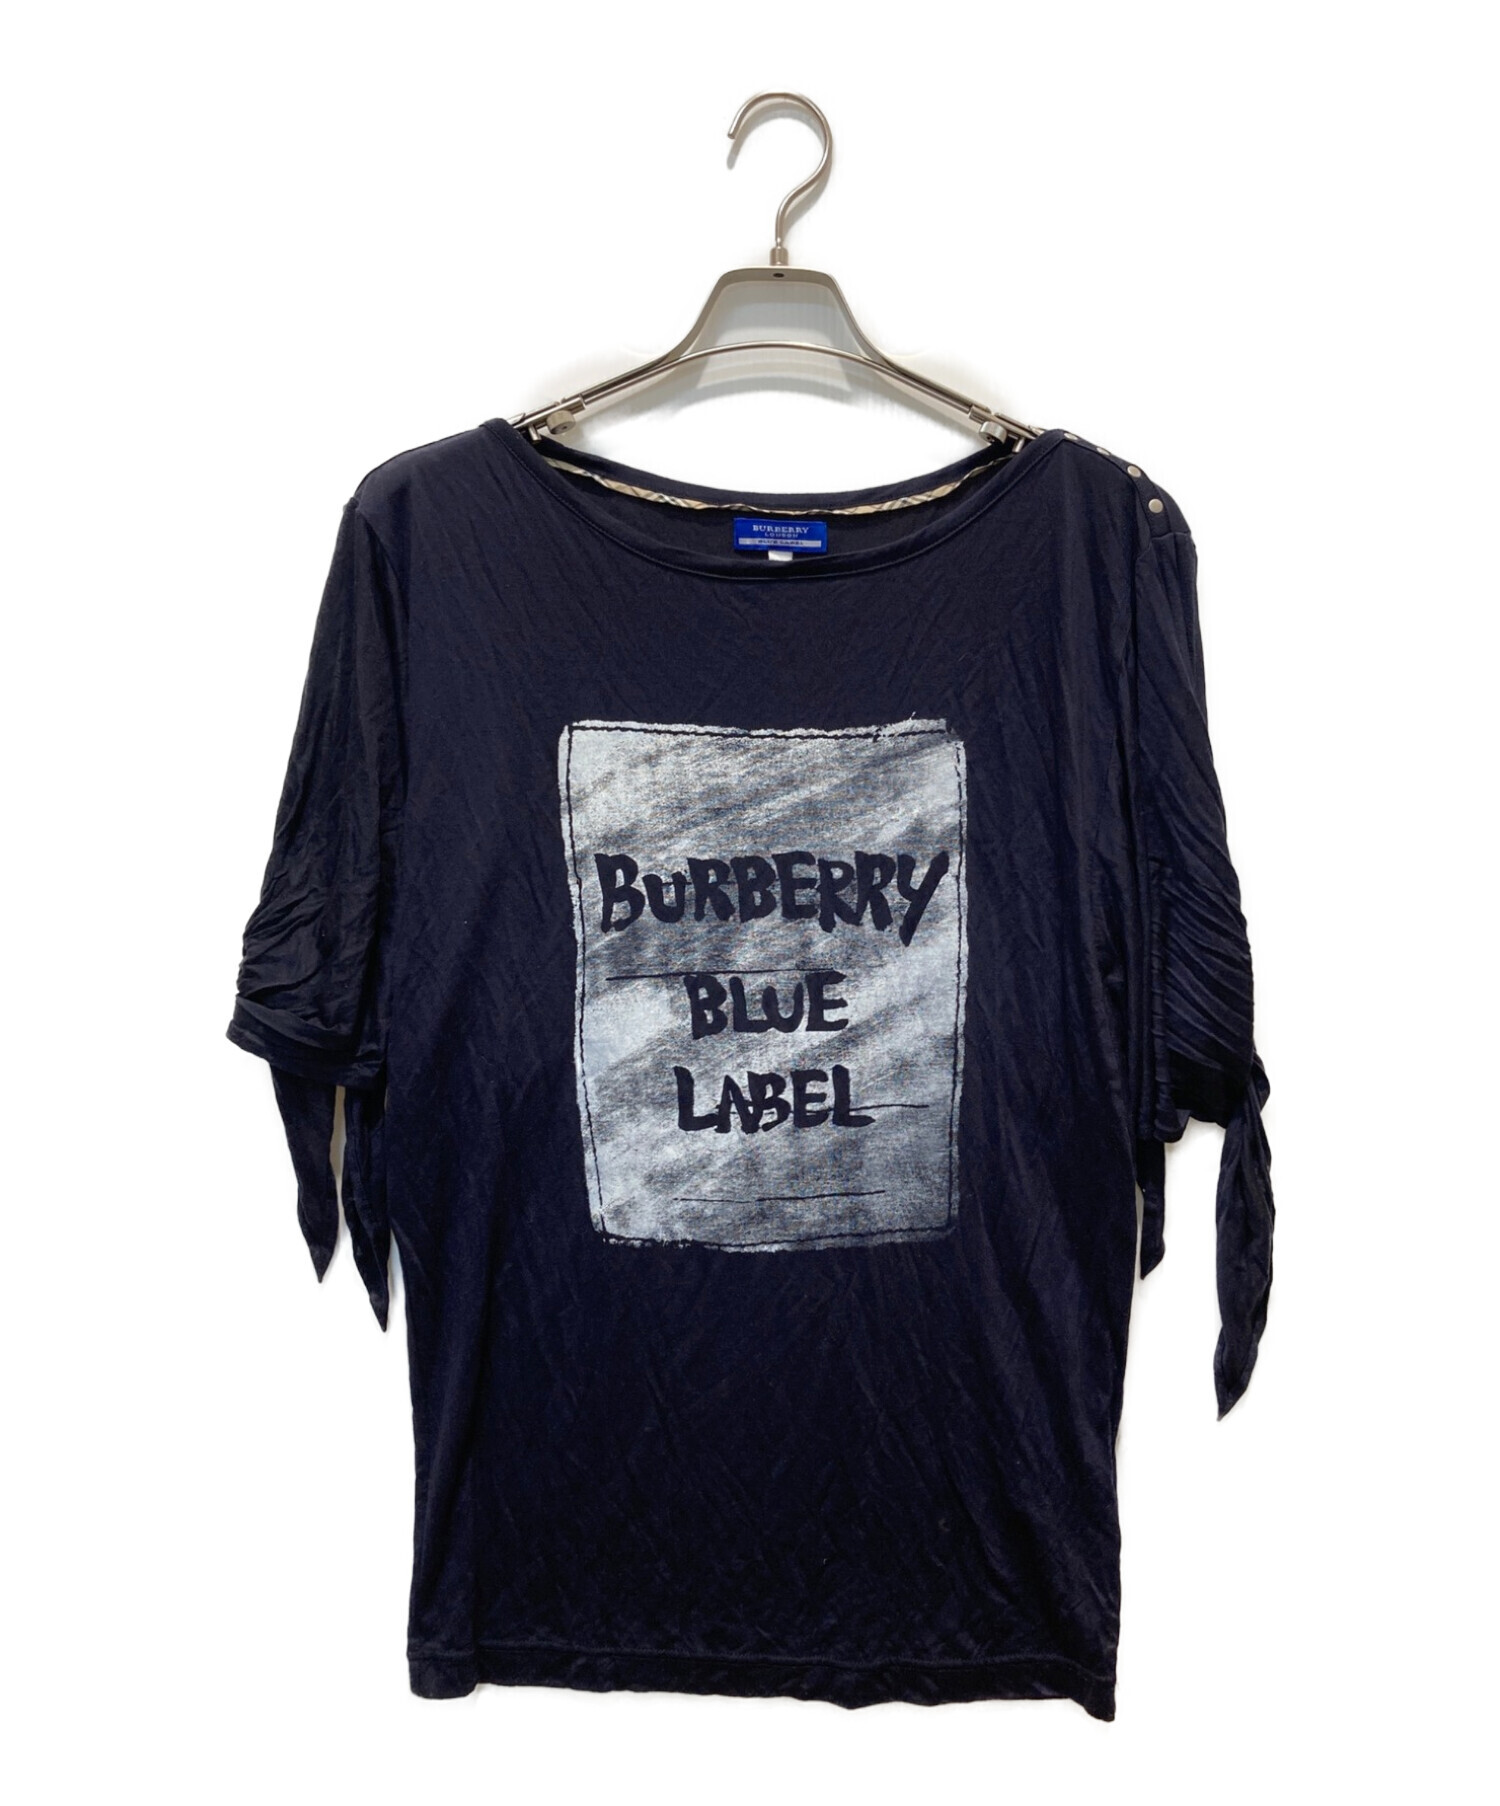 BURBERRY BLUE LABEL (バーバリーブルーレーベル) Tシャツ ネイビー サイズ:38